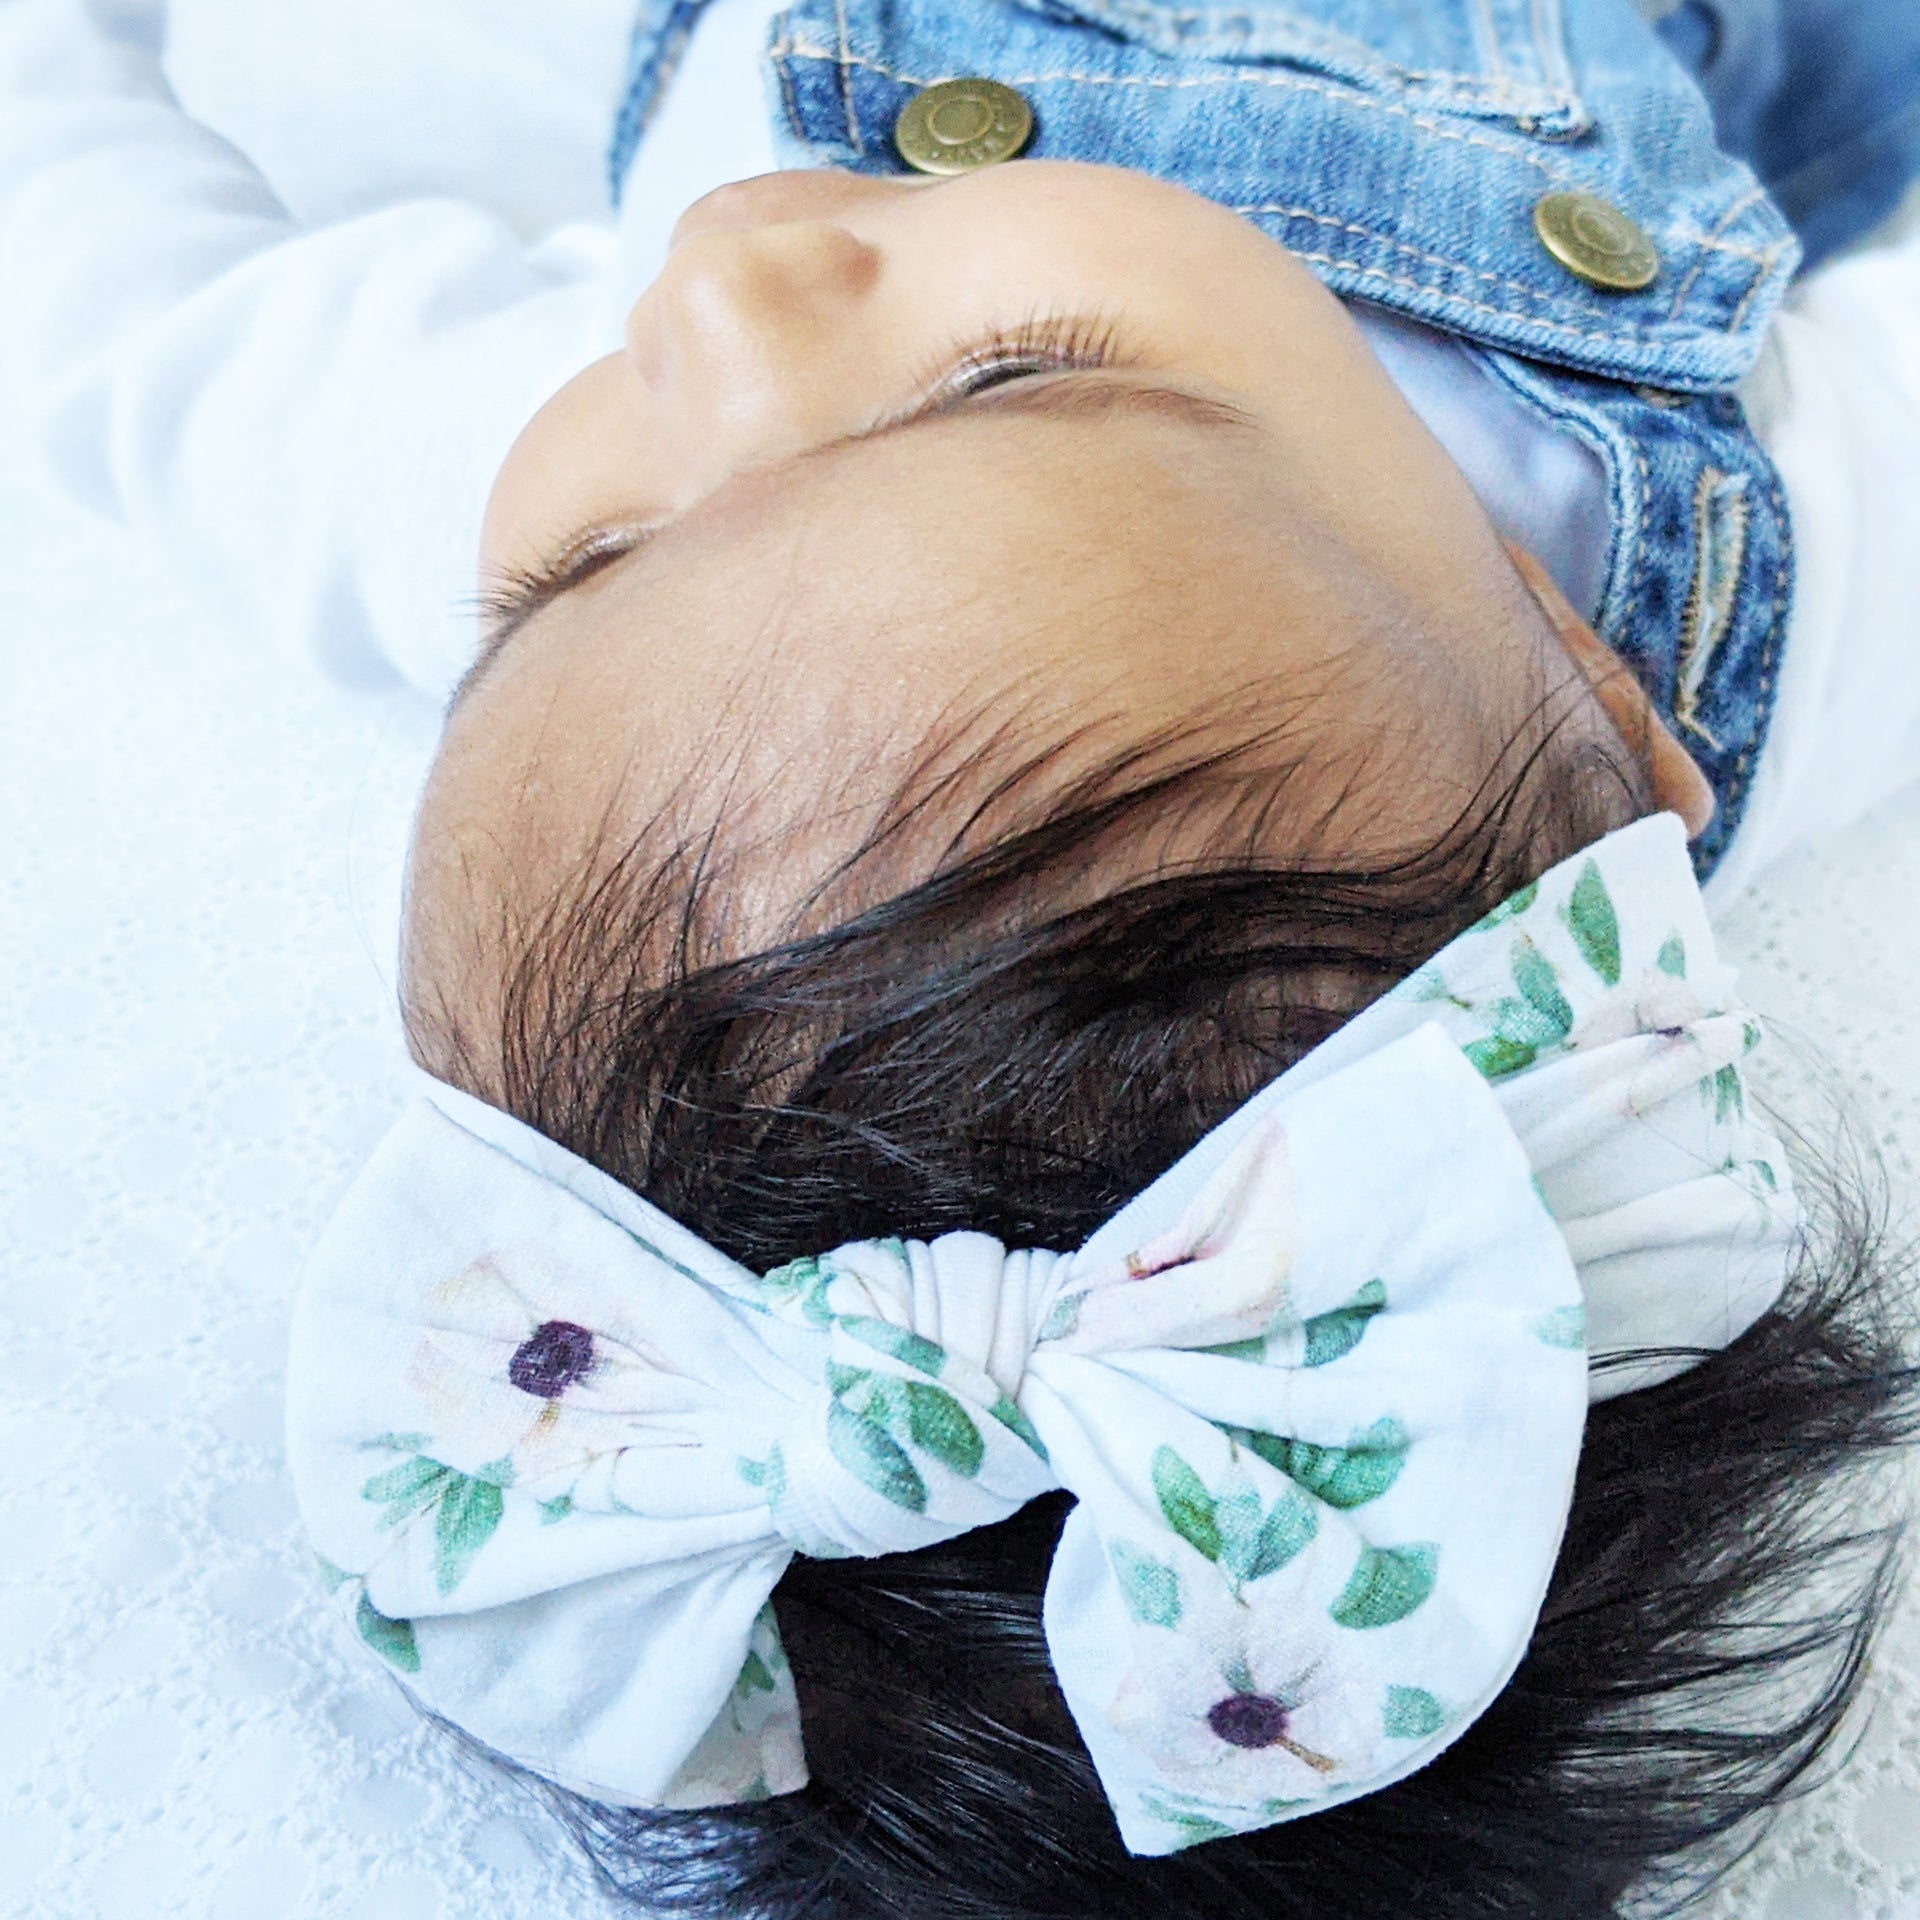 Infant Headwrap Nylon Bow Headband - Slow Floral Style Baby Wisp